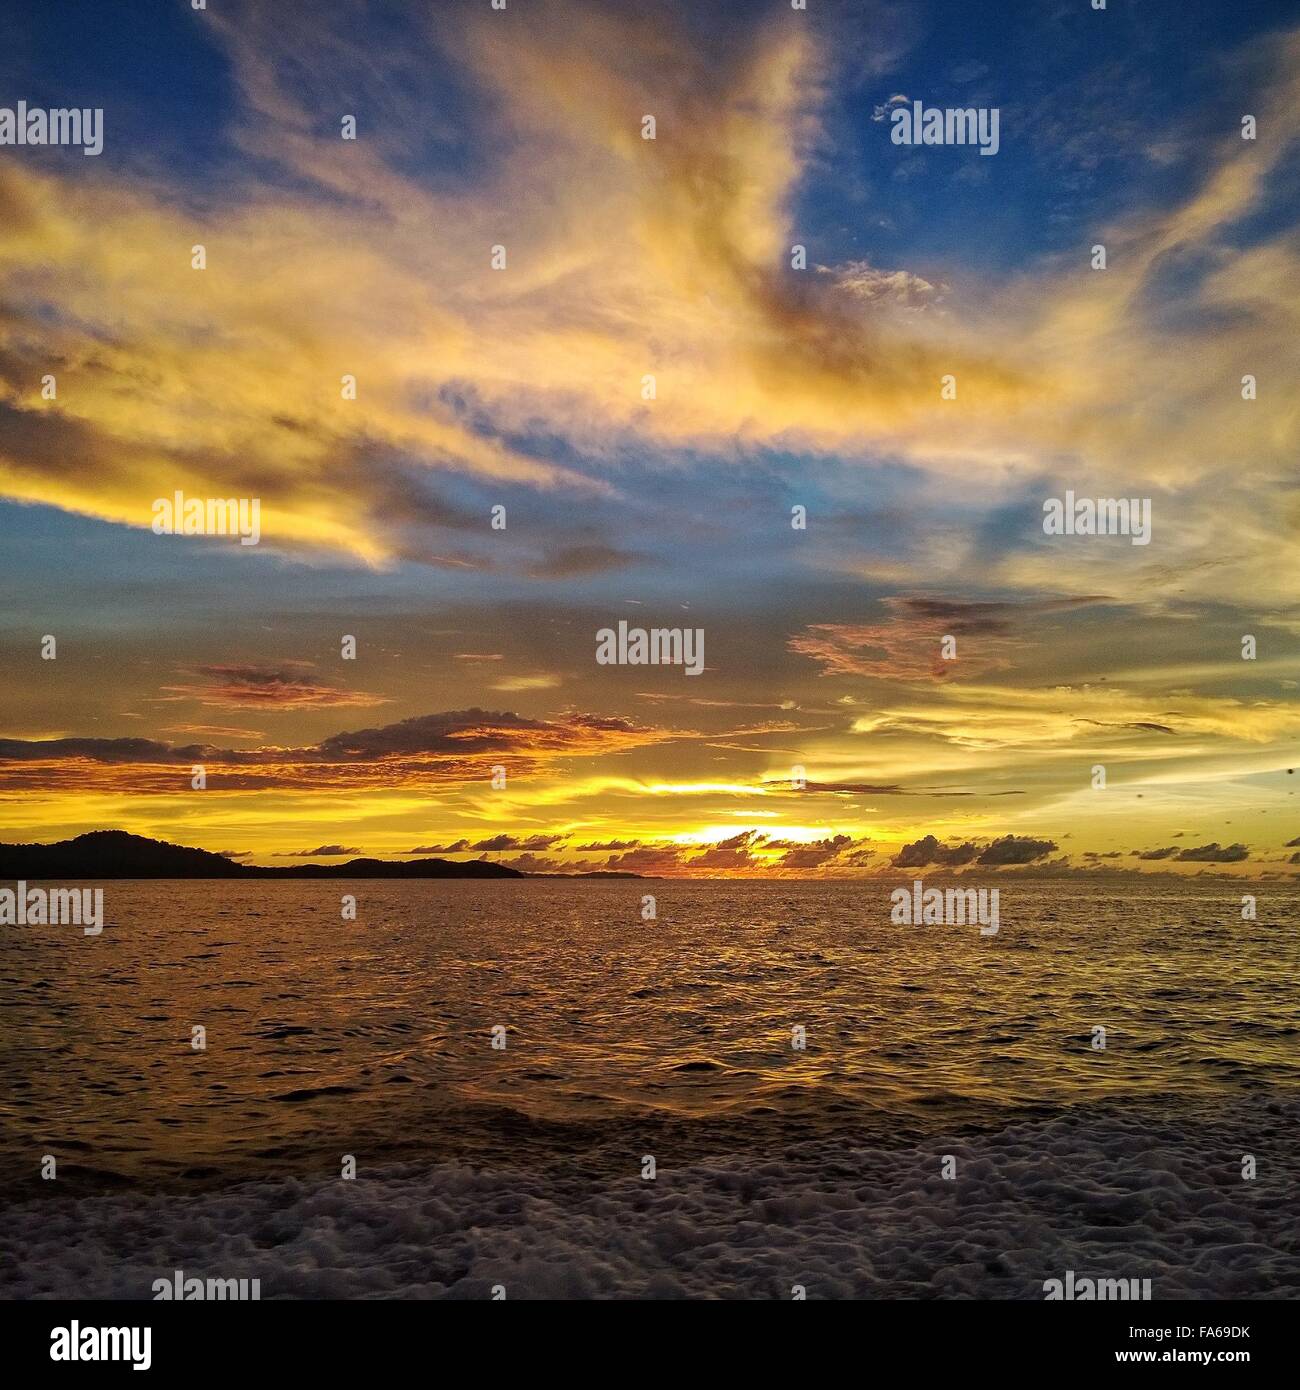 Sunset over sea, Indonesia Stock Photo